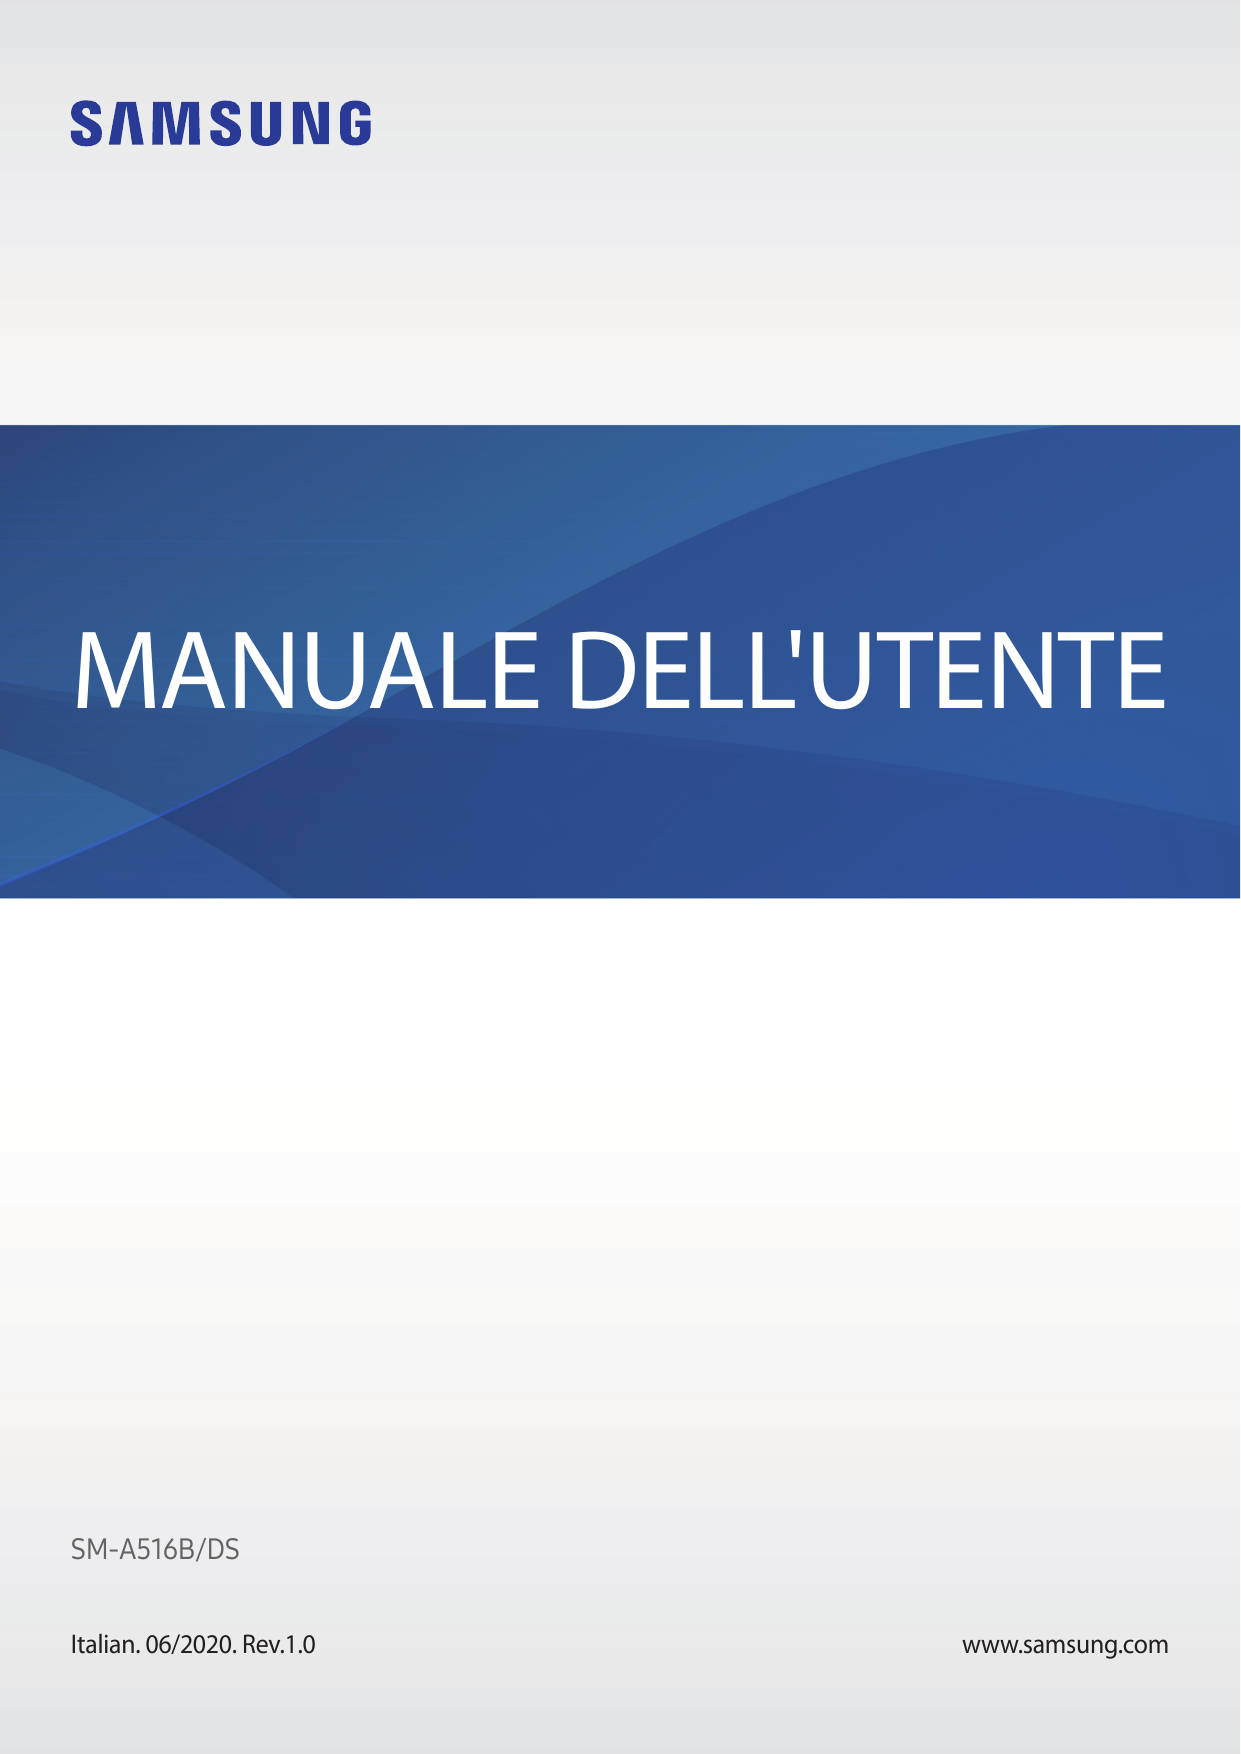 MANUALE DELL'UTENTESM-A516B/DSItalian. 06/2020. Rev.1.0www.samsung.com